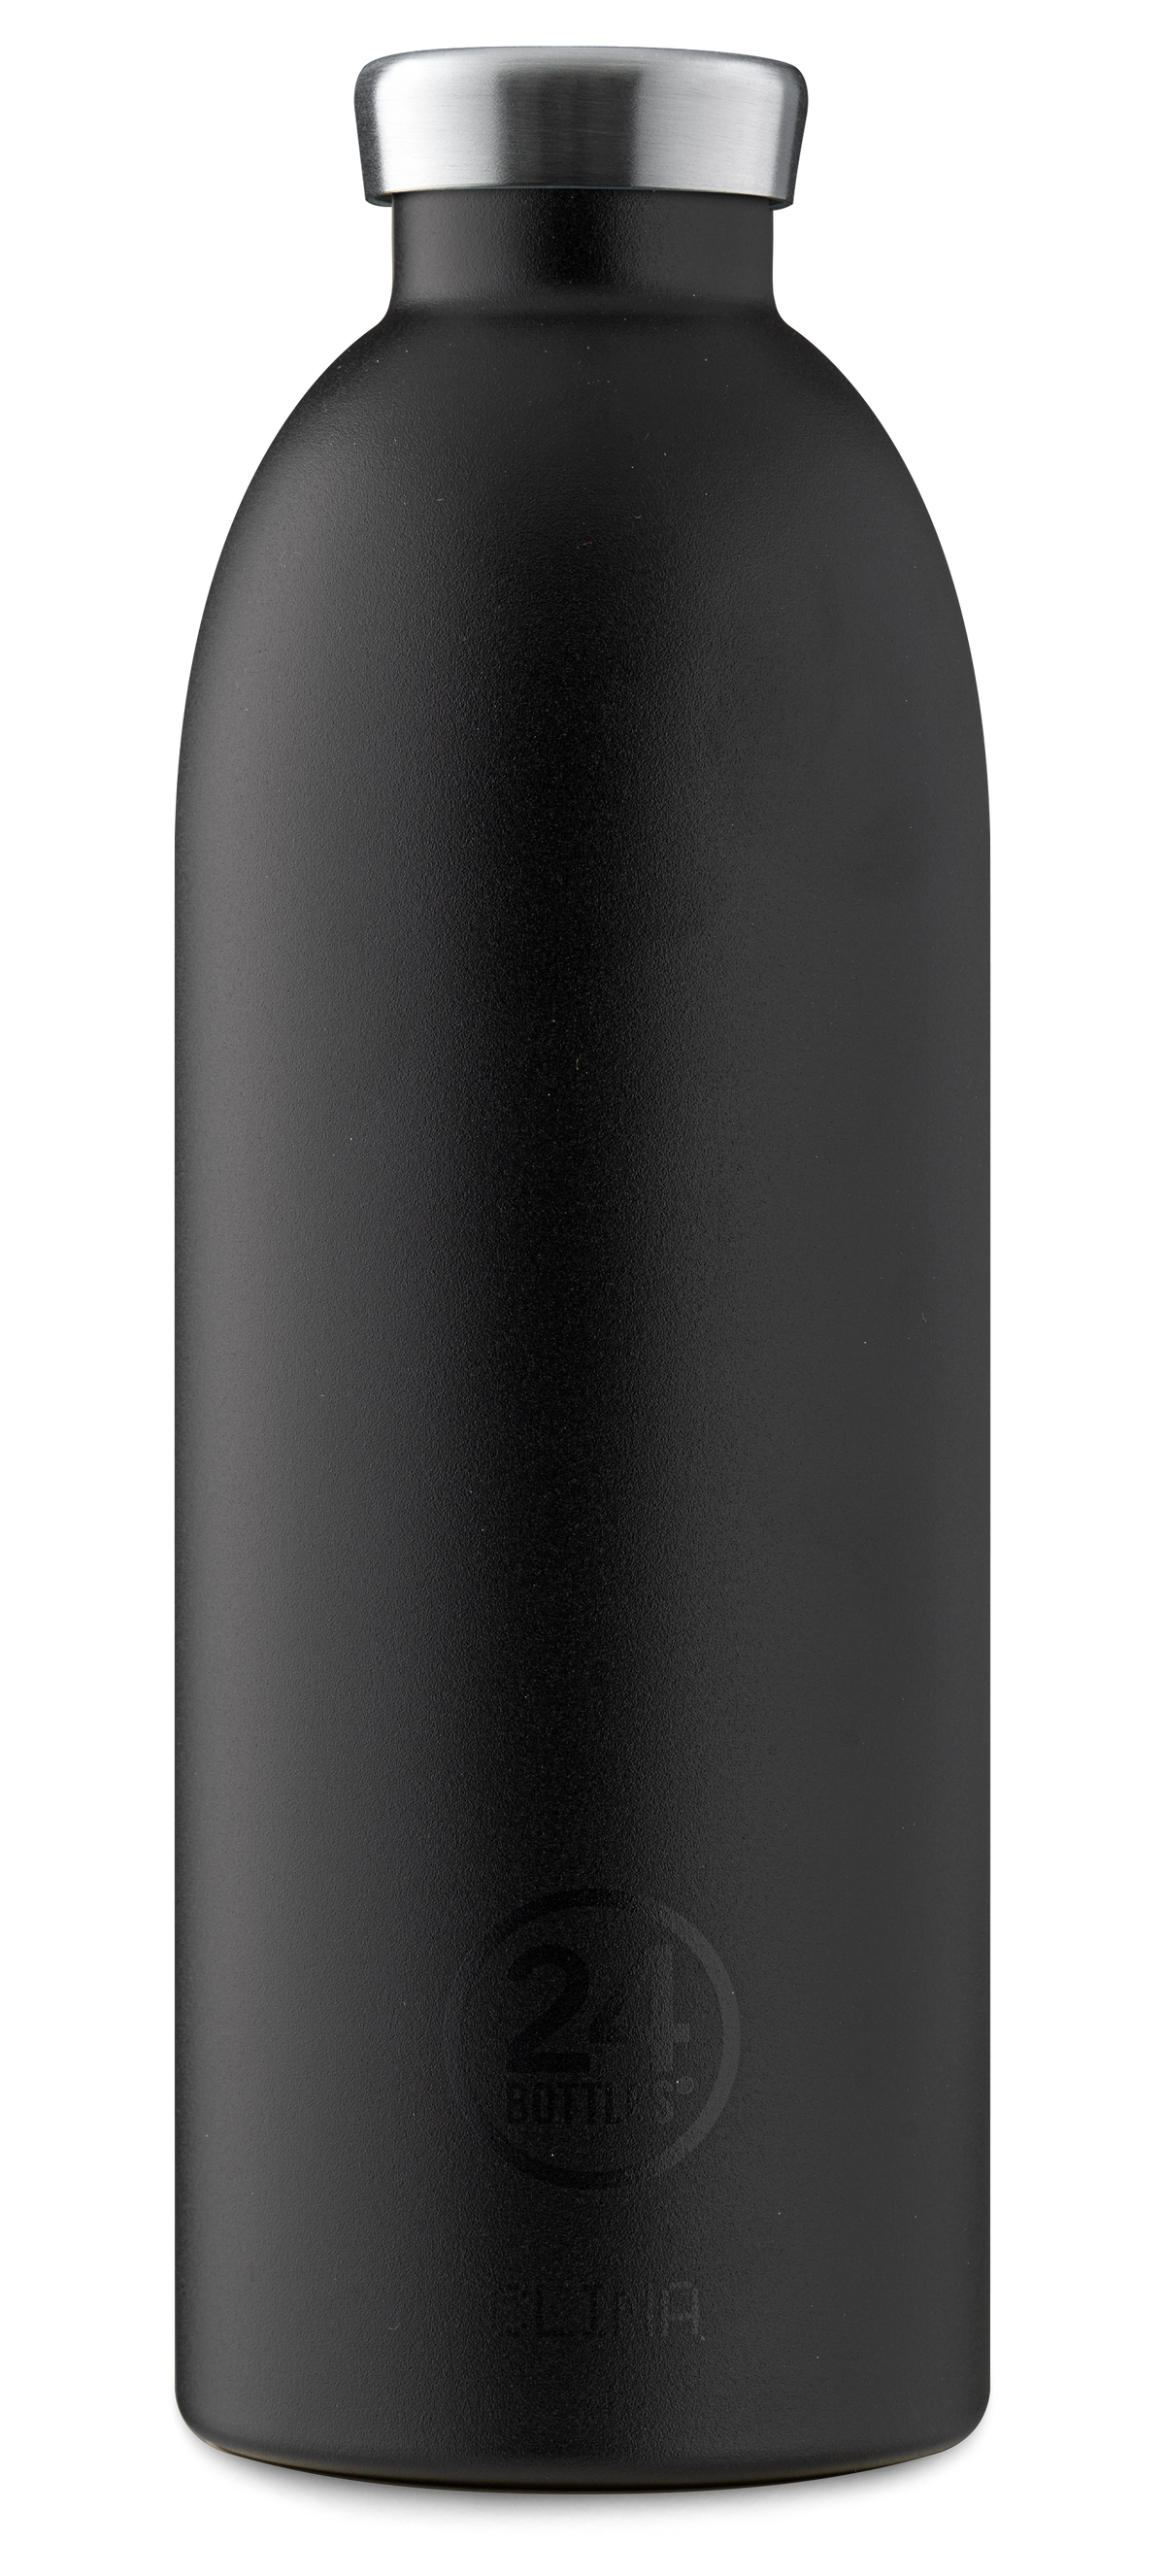 24BOTTLES Clima Double Walled Stainless Steel Water Bottle - 850ml - Stone Tuxedo Black